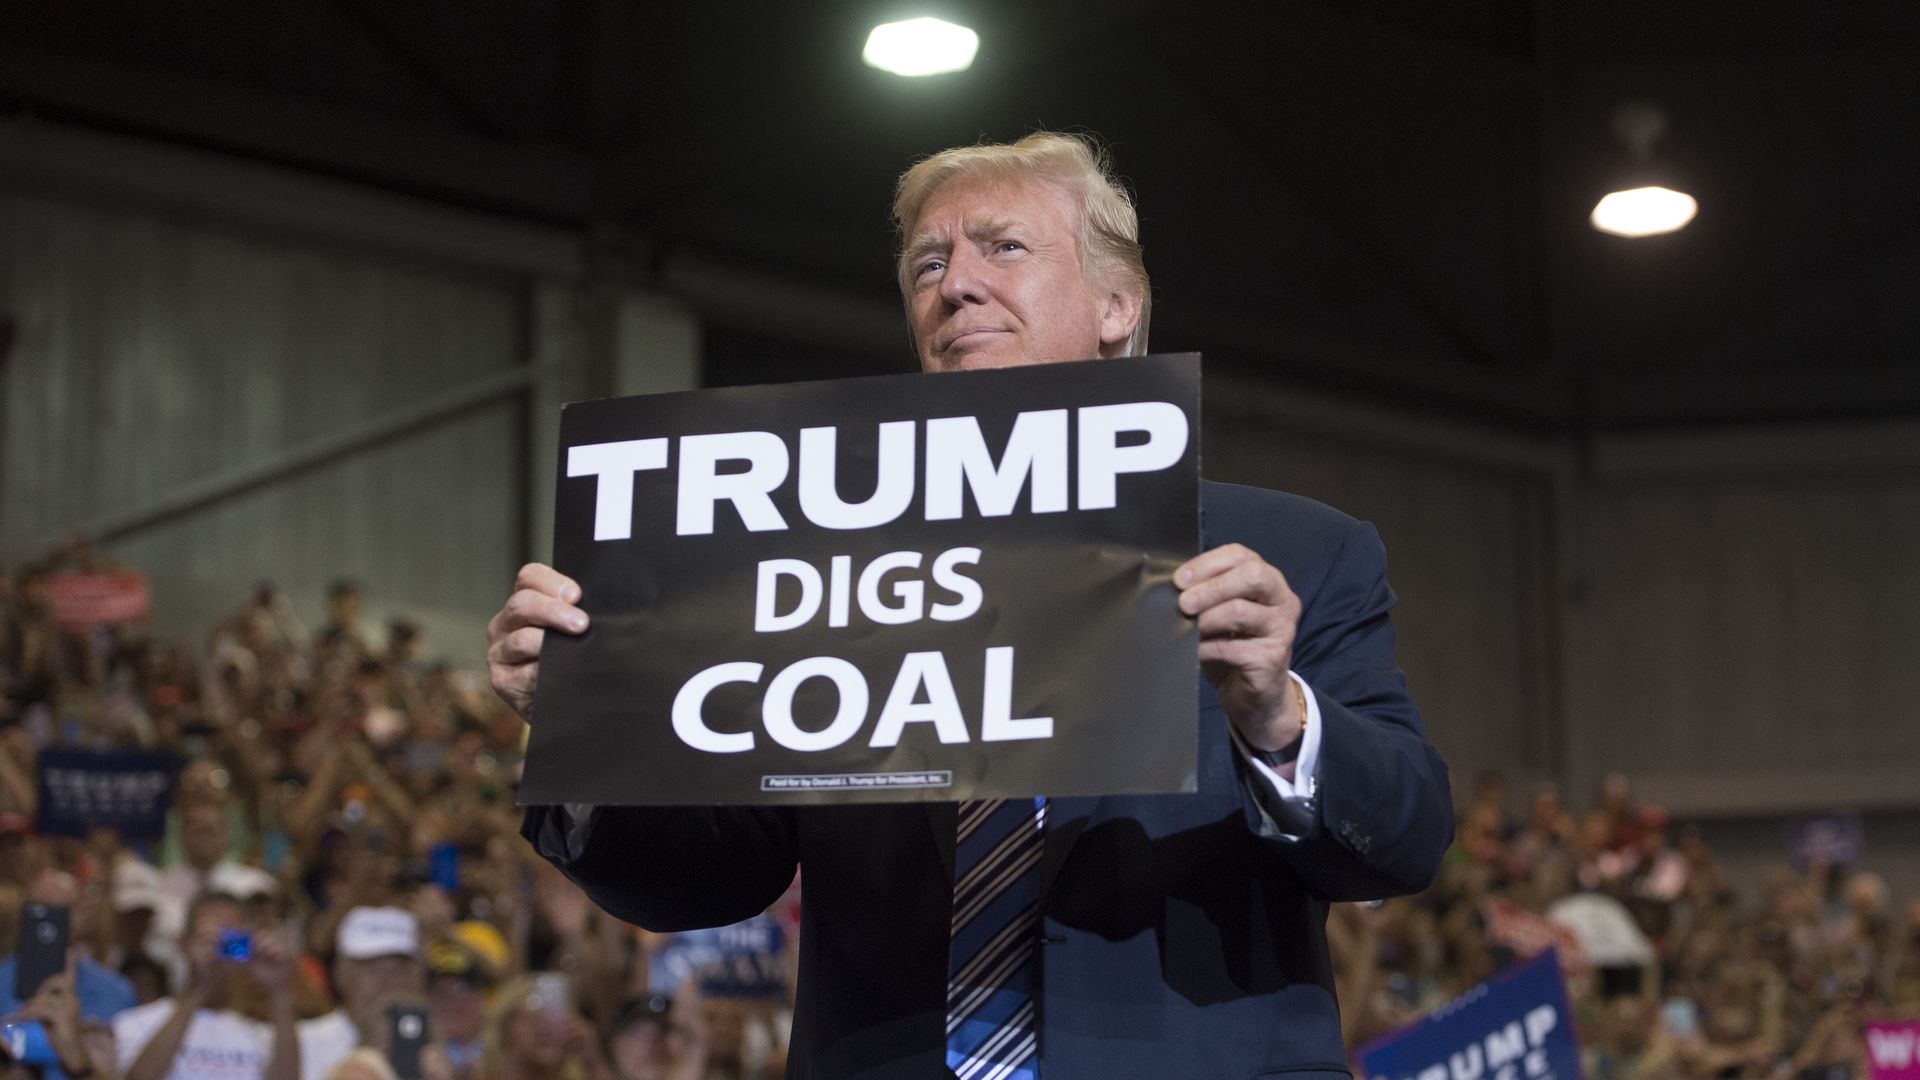 President Trump holding a "Trump digs coal" sign